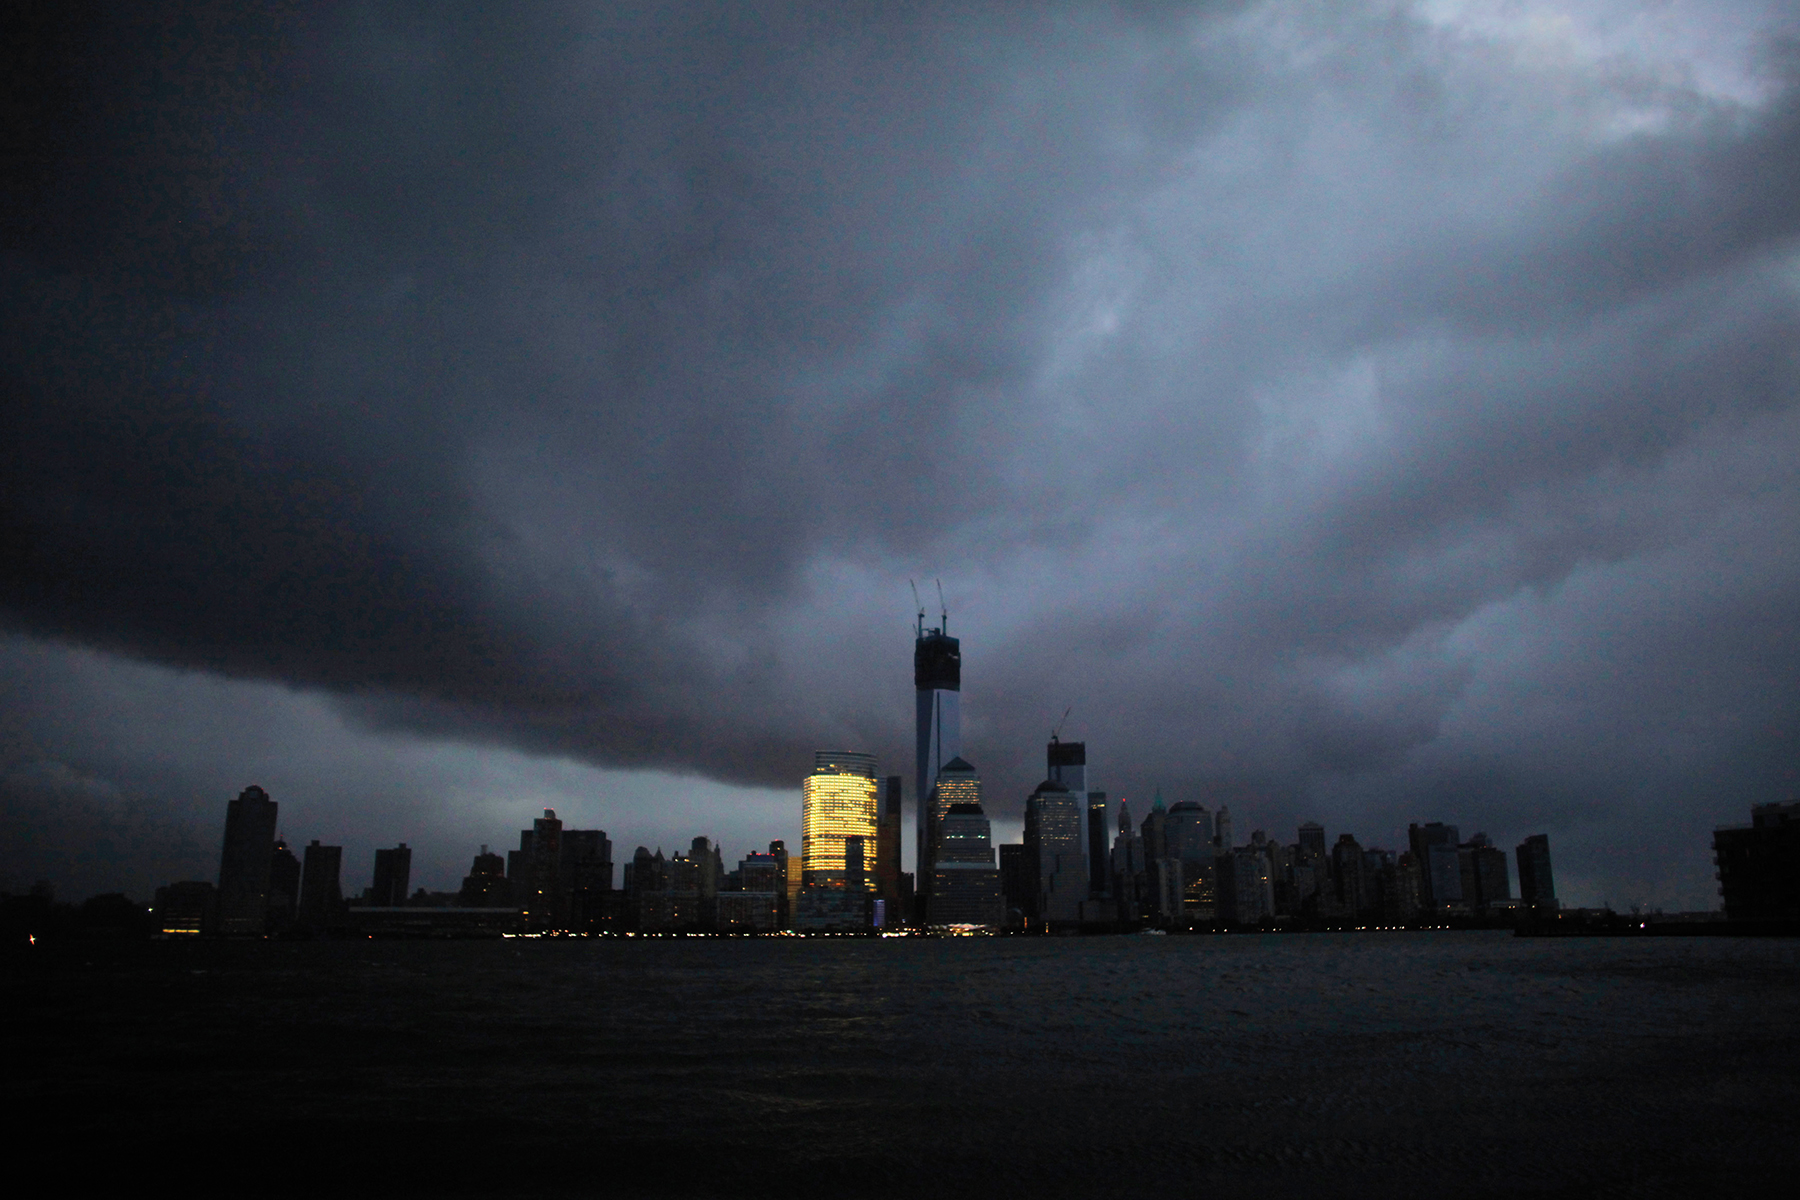 Power in Goldman Sachs headquarters as Manhattan plunged into darkness during Hurricane Sandy